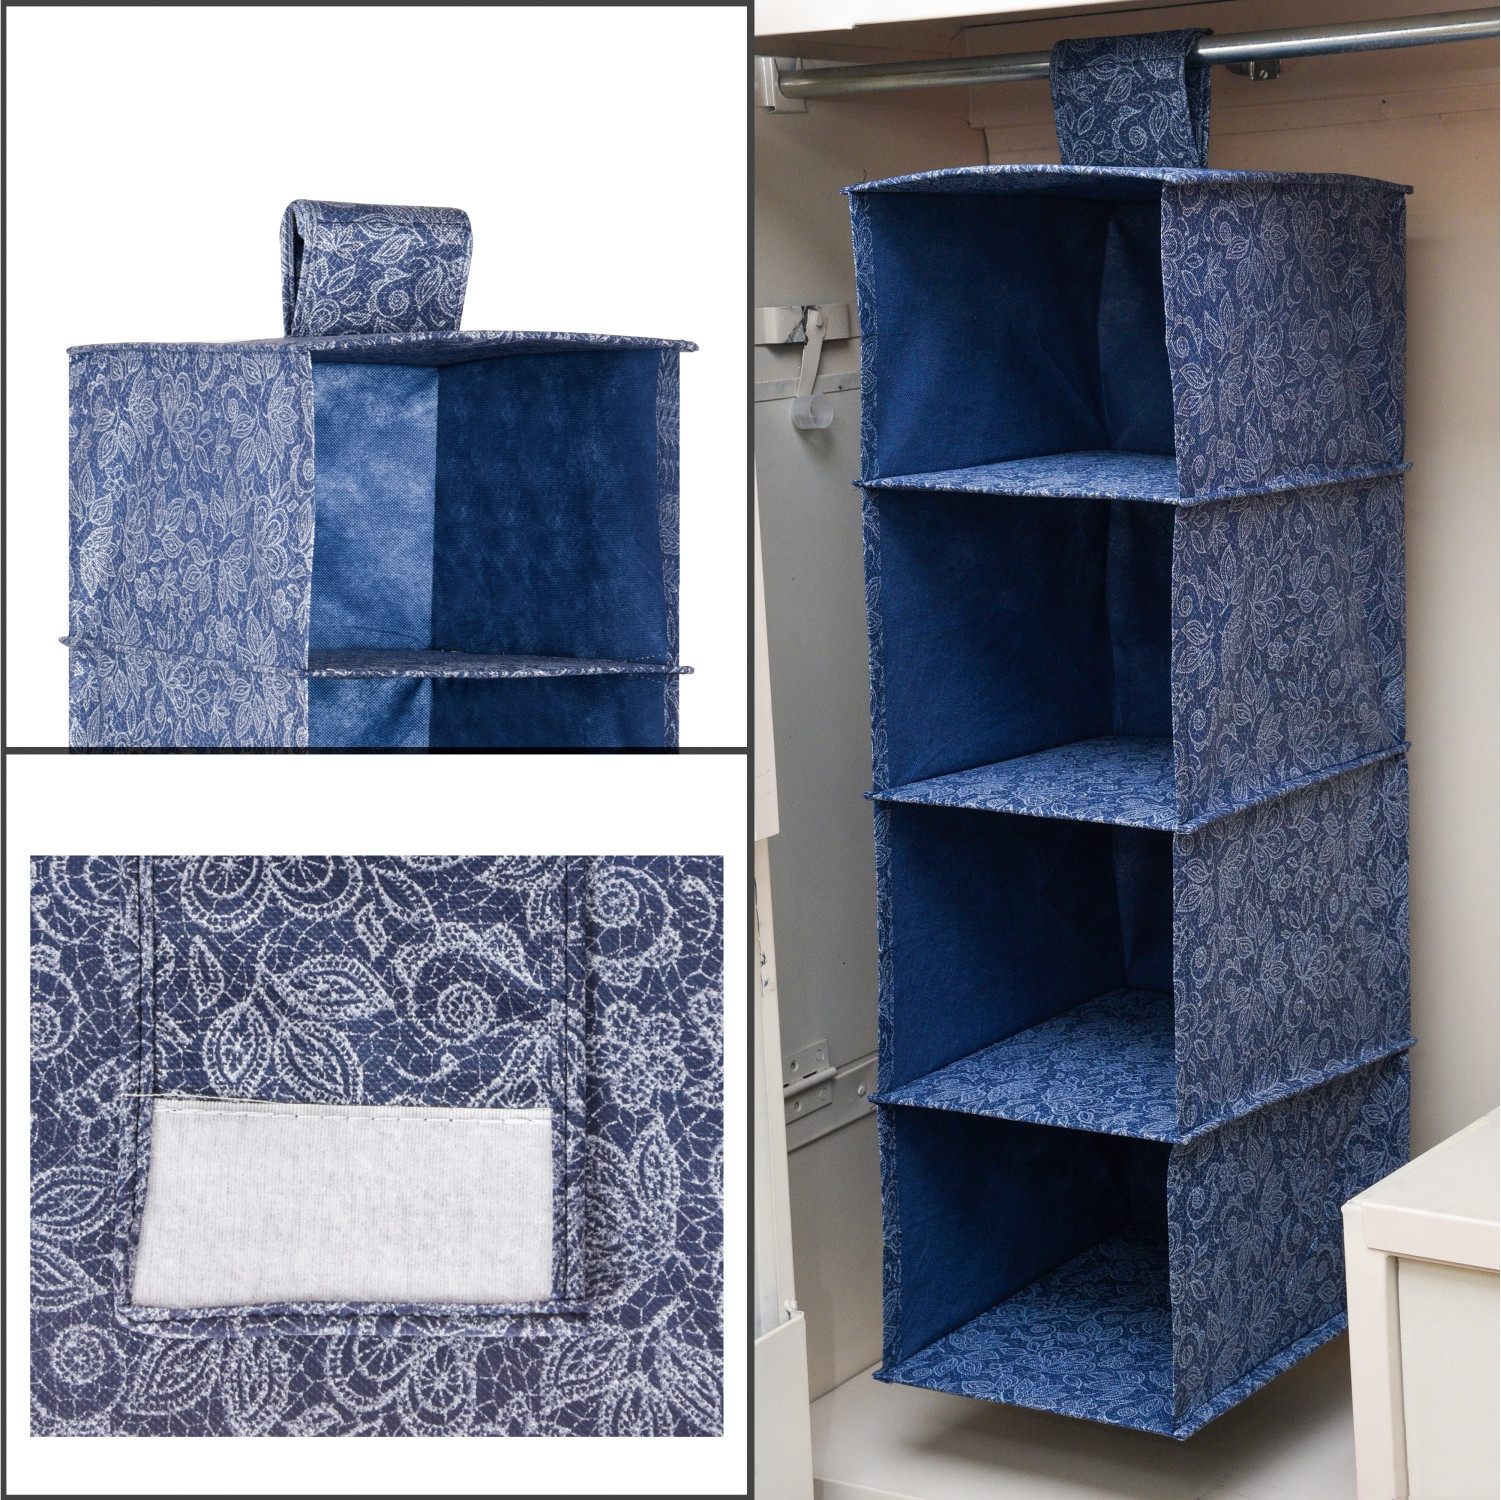 Kuber Industries Shoe Rack | 4 Shelf Foldable Storage Rack | Clothes Hanging Organizer | Shoe Storage Organizer | Closet Organizer with Velcro | Shoe Rack Flower Printed | Navy Blue